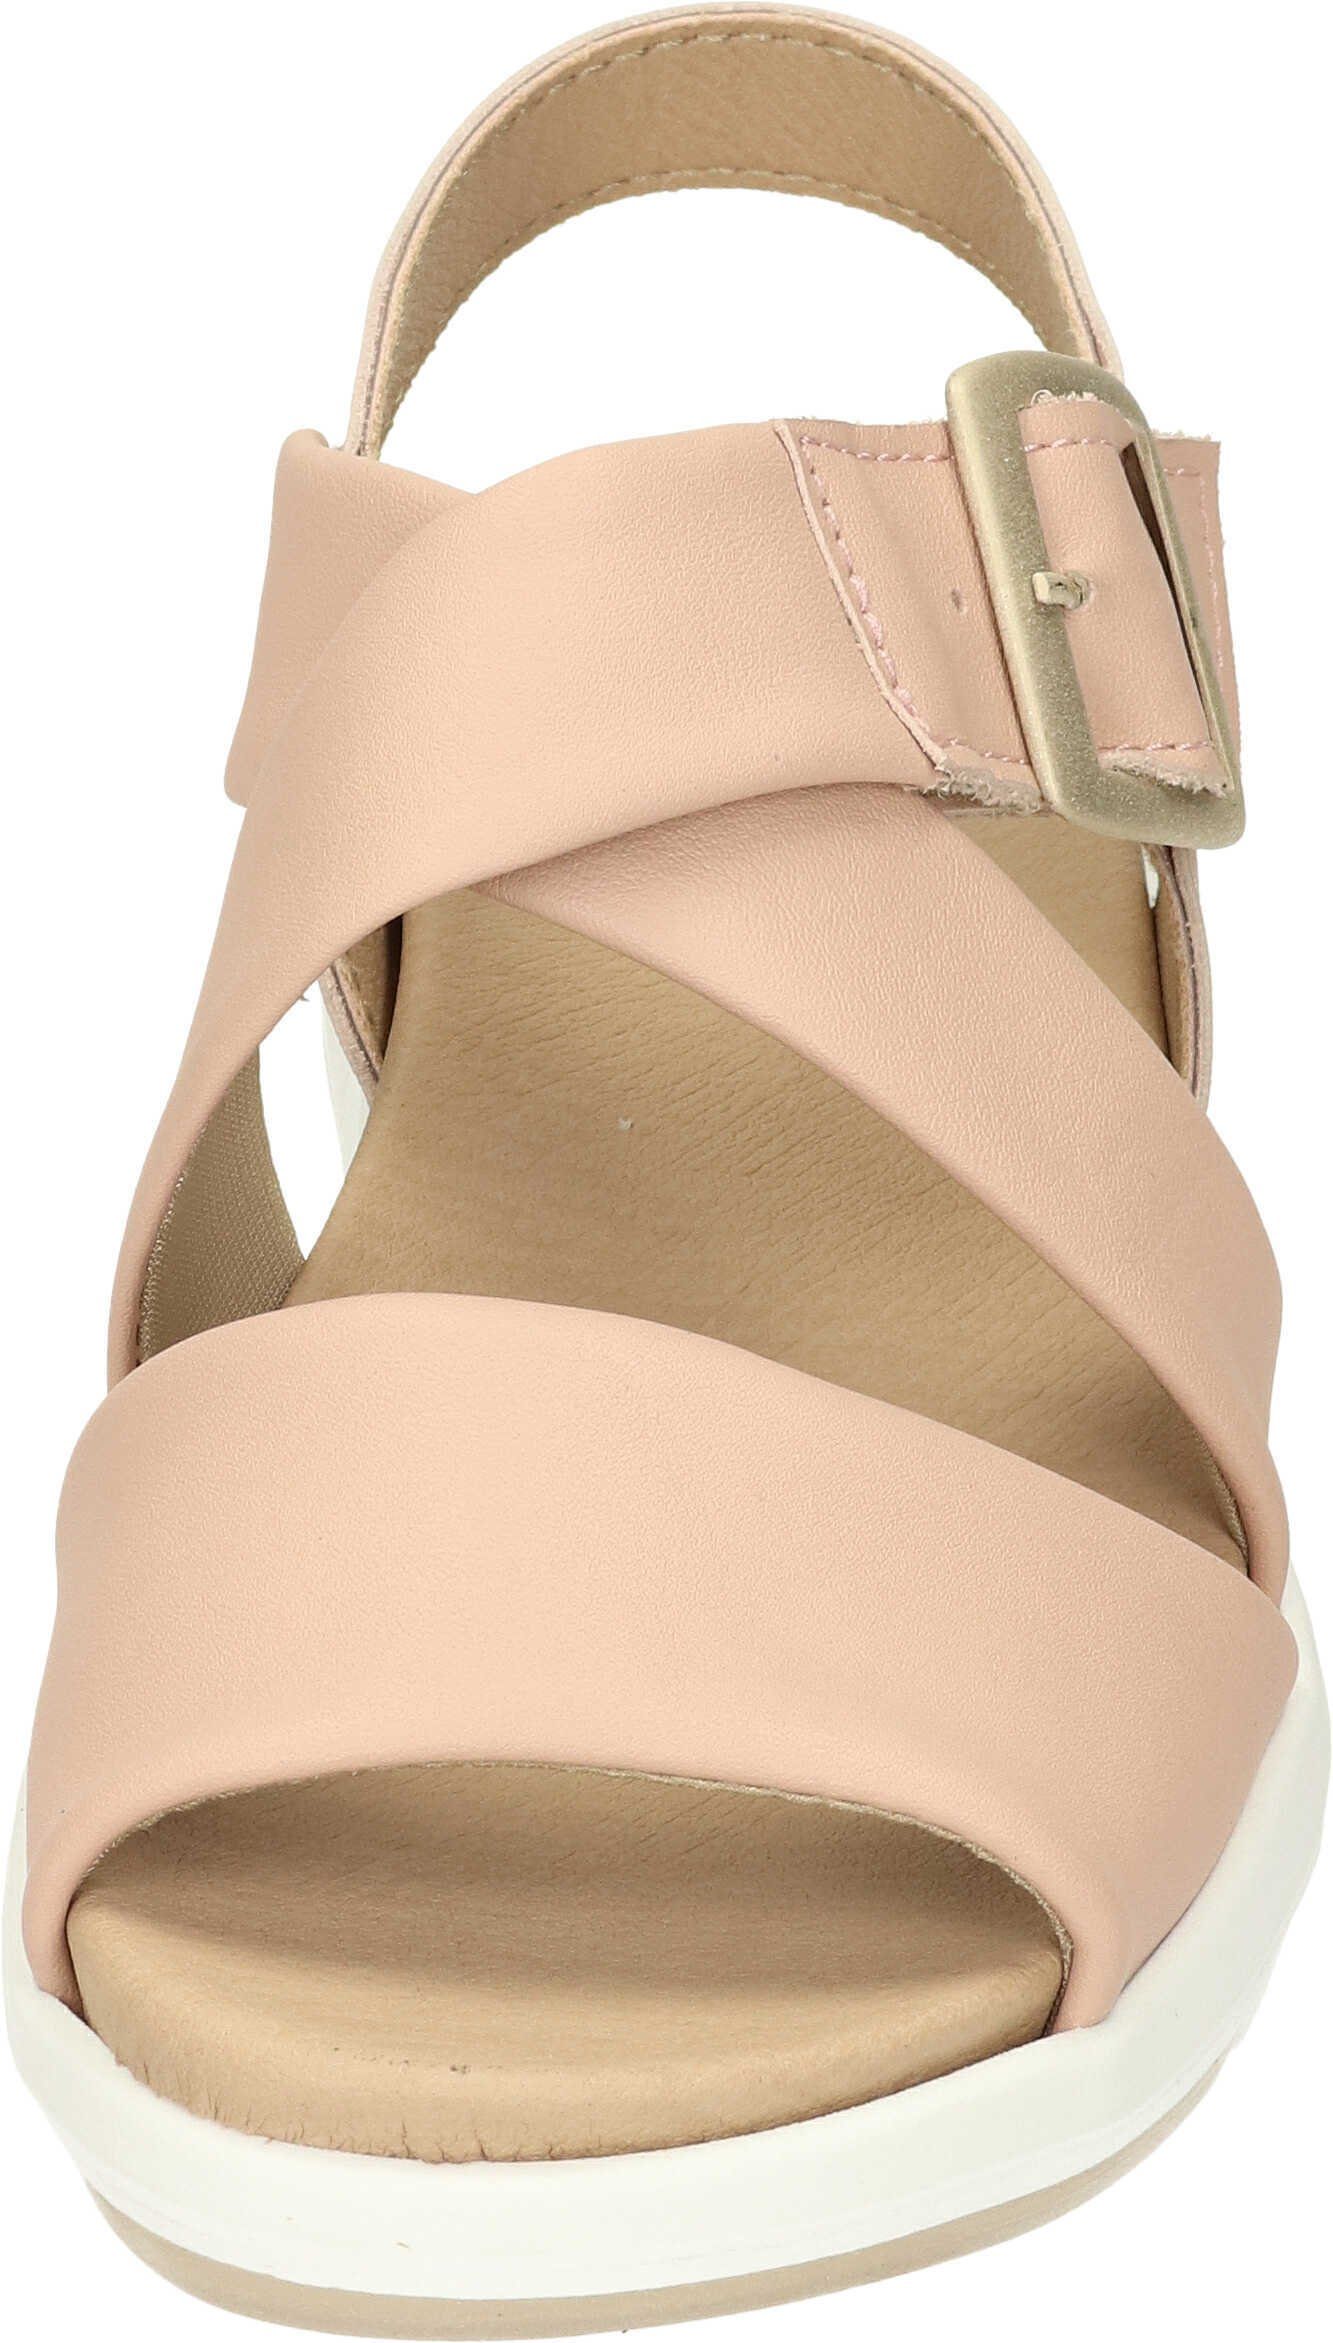 Sandalen Sandale Gummizug Comfortabel mit rosa